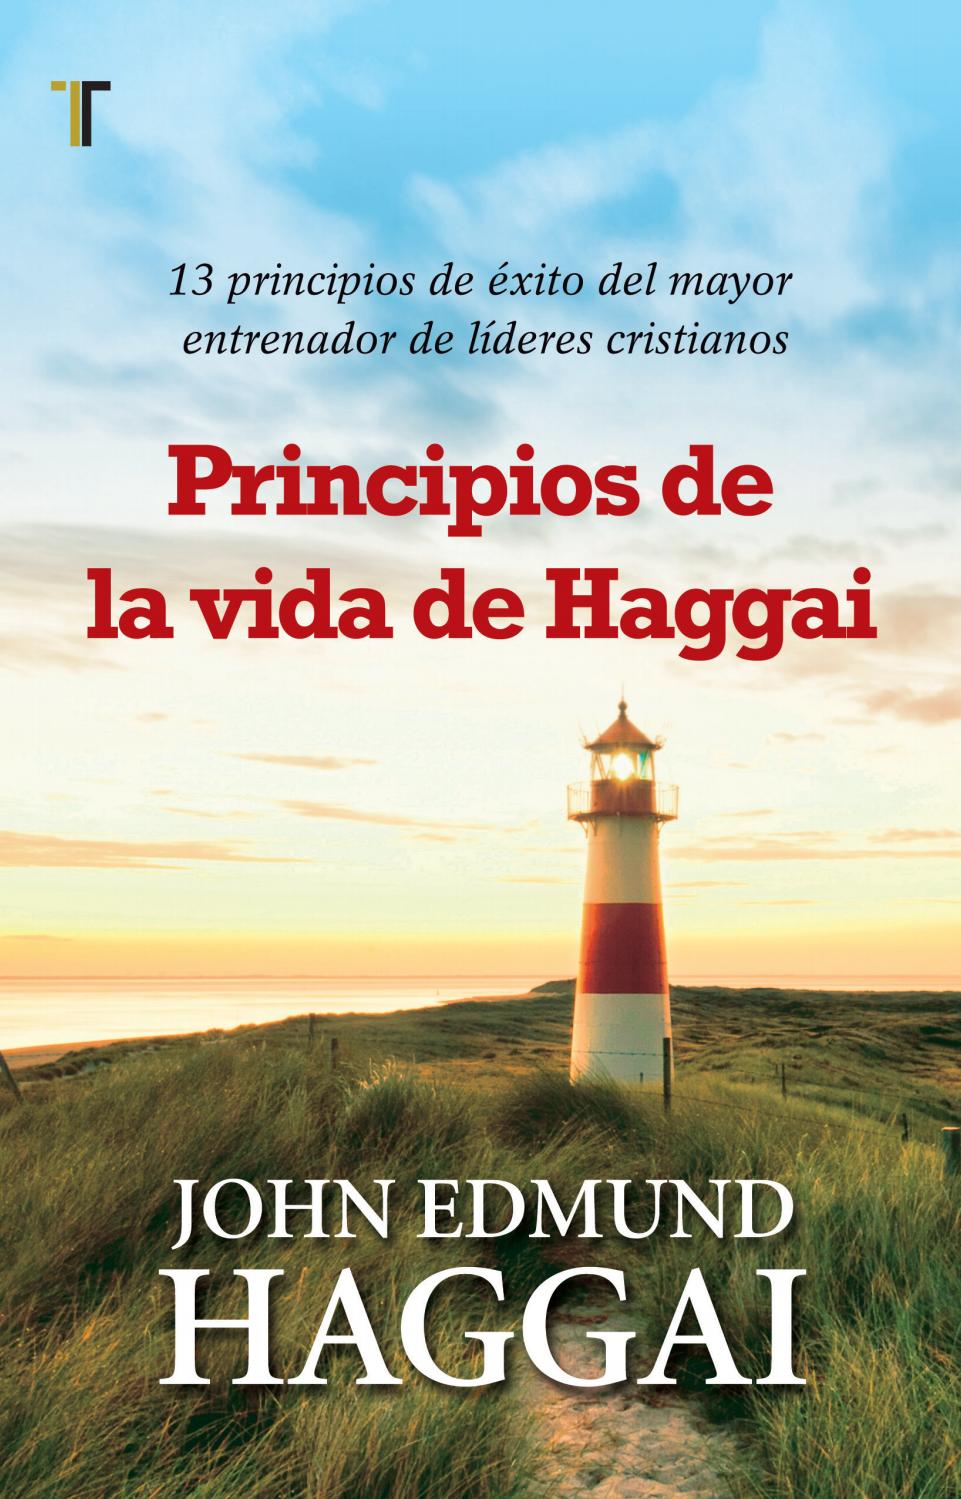 John Edmund Haggai en BiblioEteca